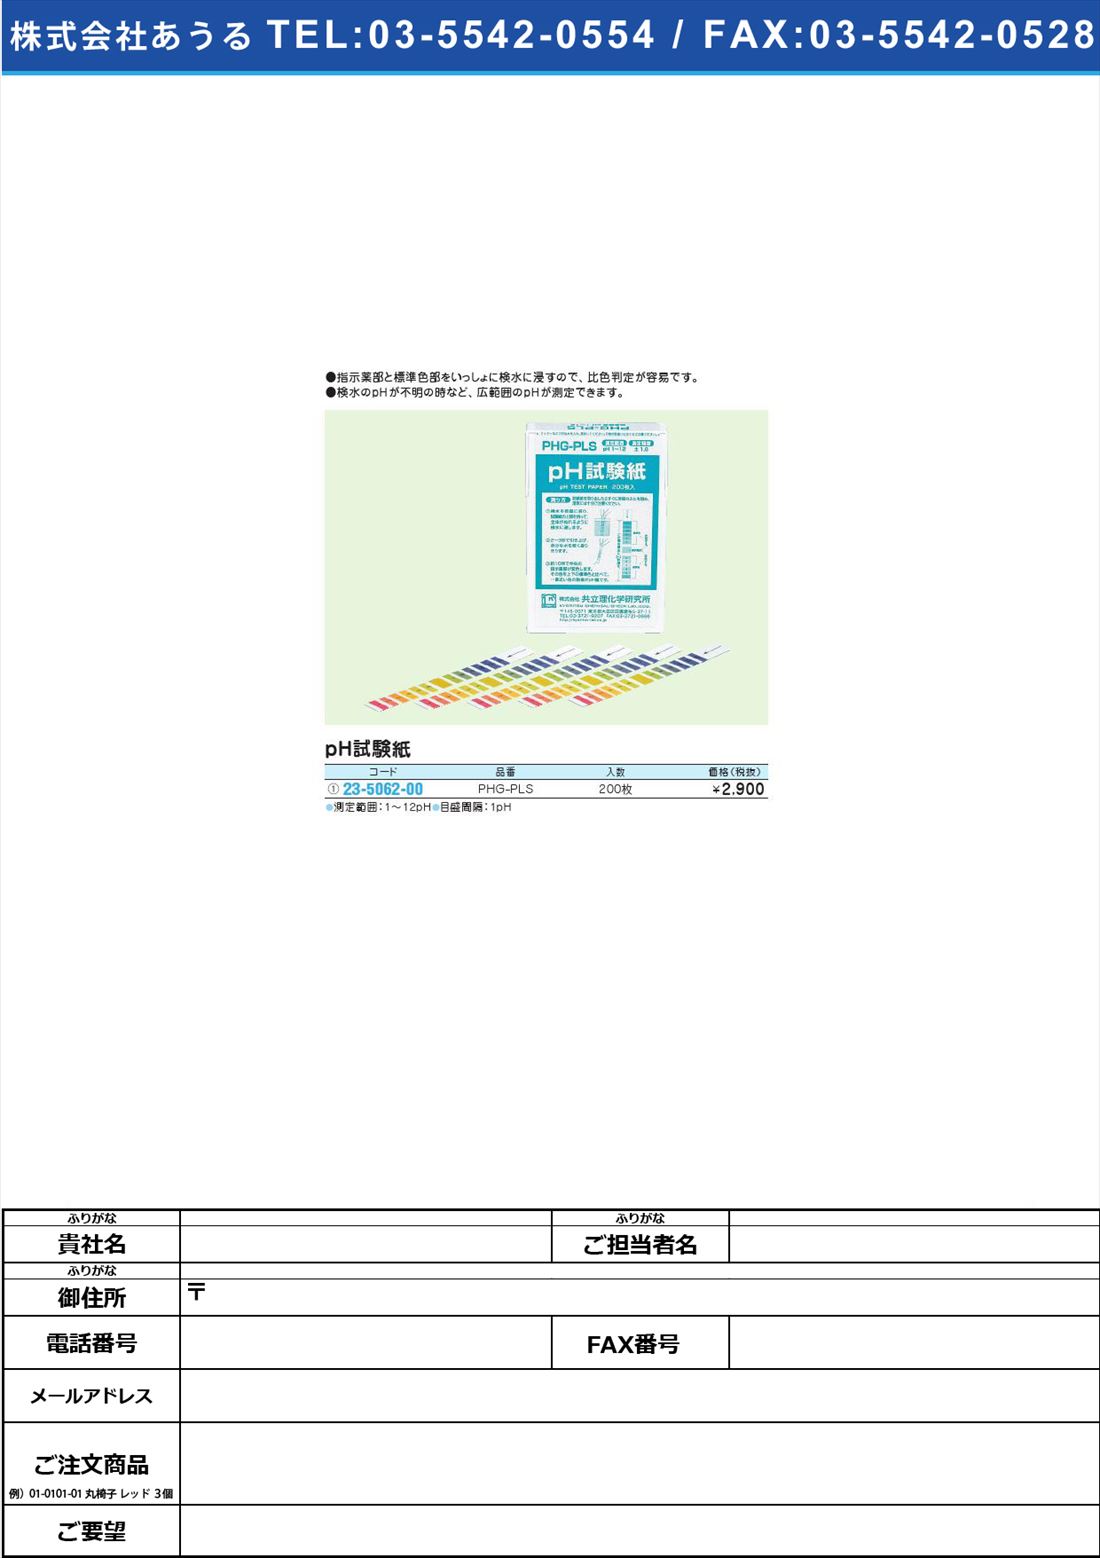 ｐH試験紙 PHG-PLS(23-5062-00)